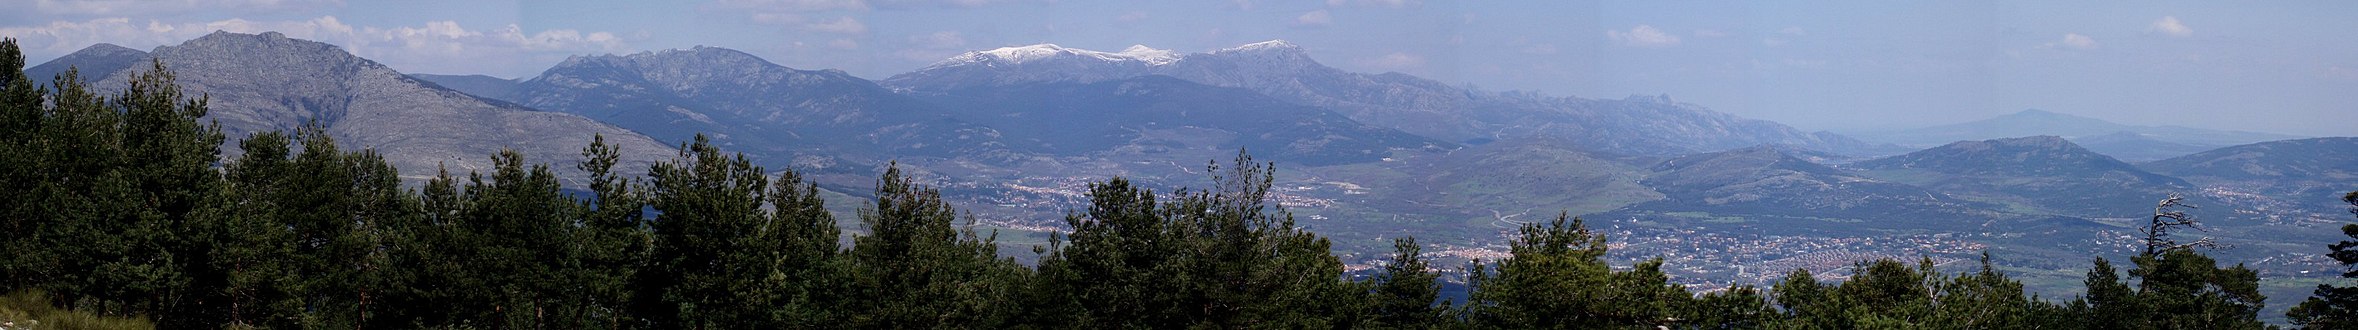 Sierra de Guadarrama from proximities of Cabeza Lijar summit